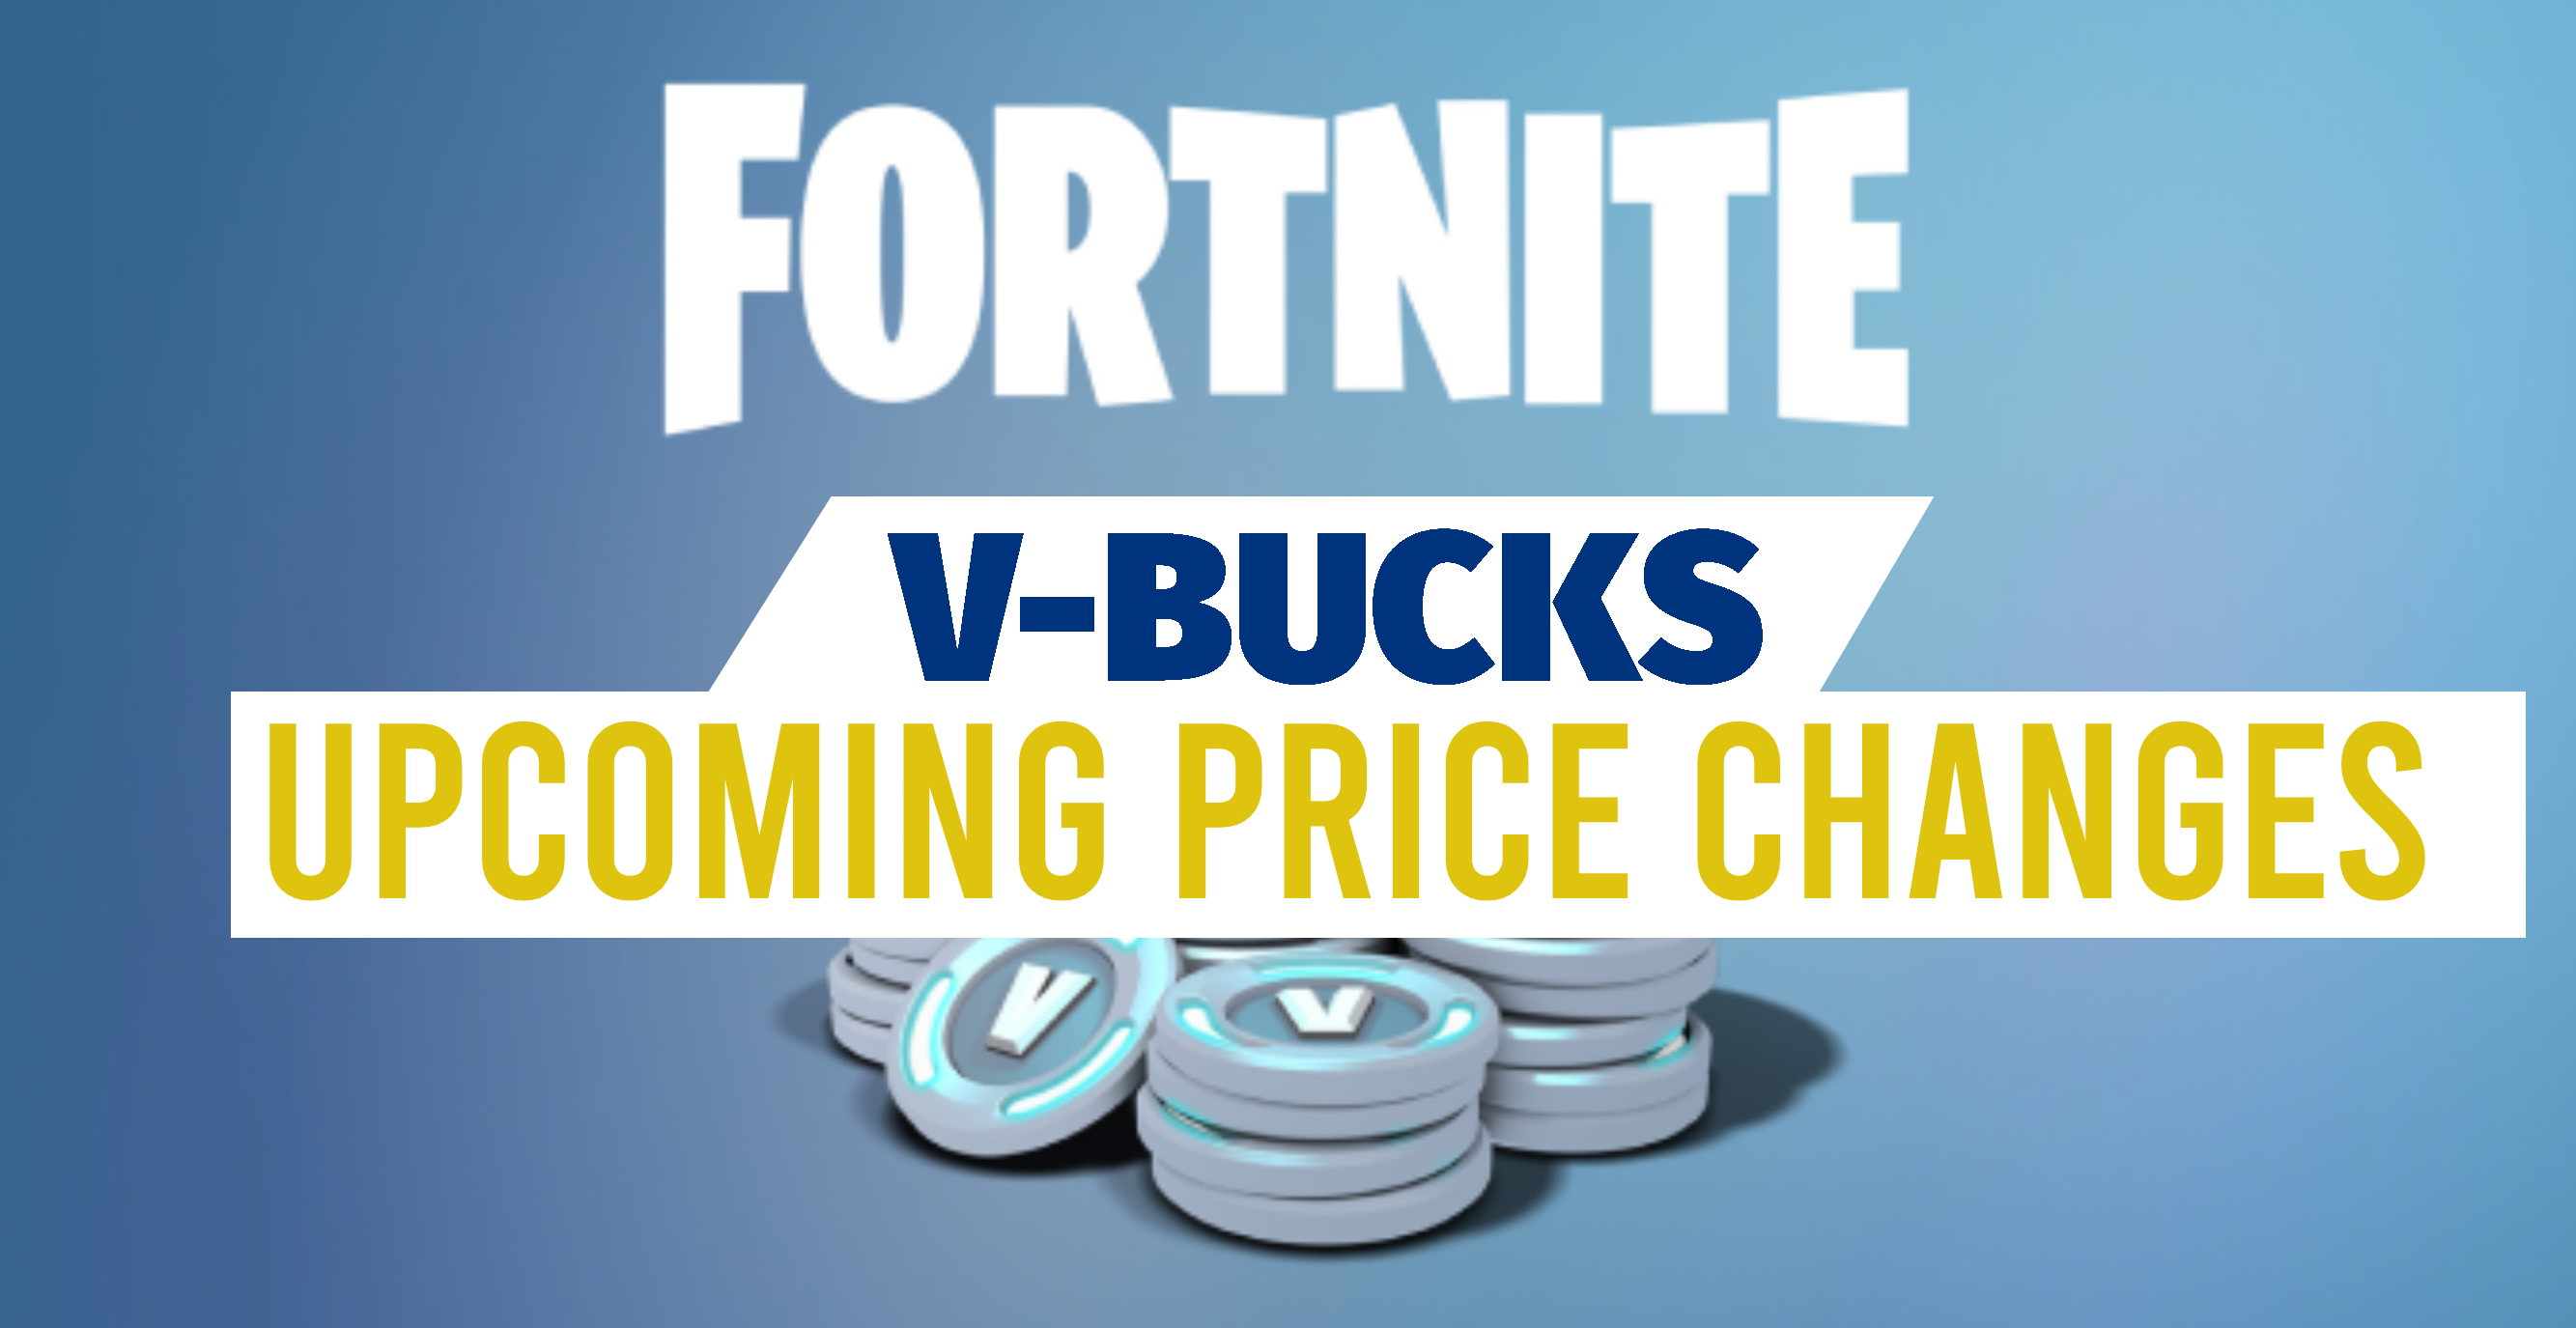 Fortnite's Upcoming V-Bucks Price Changes - The Game Statistics